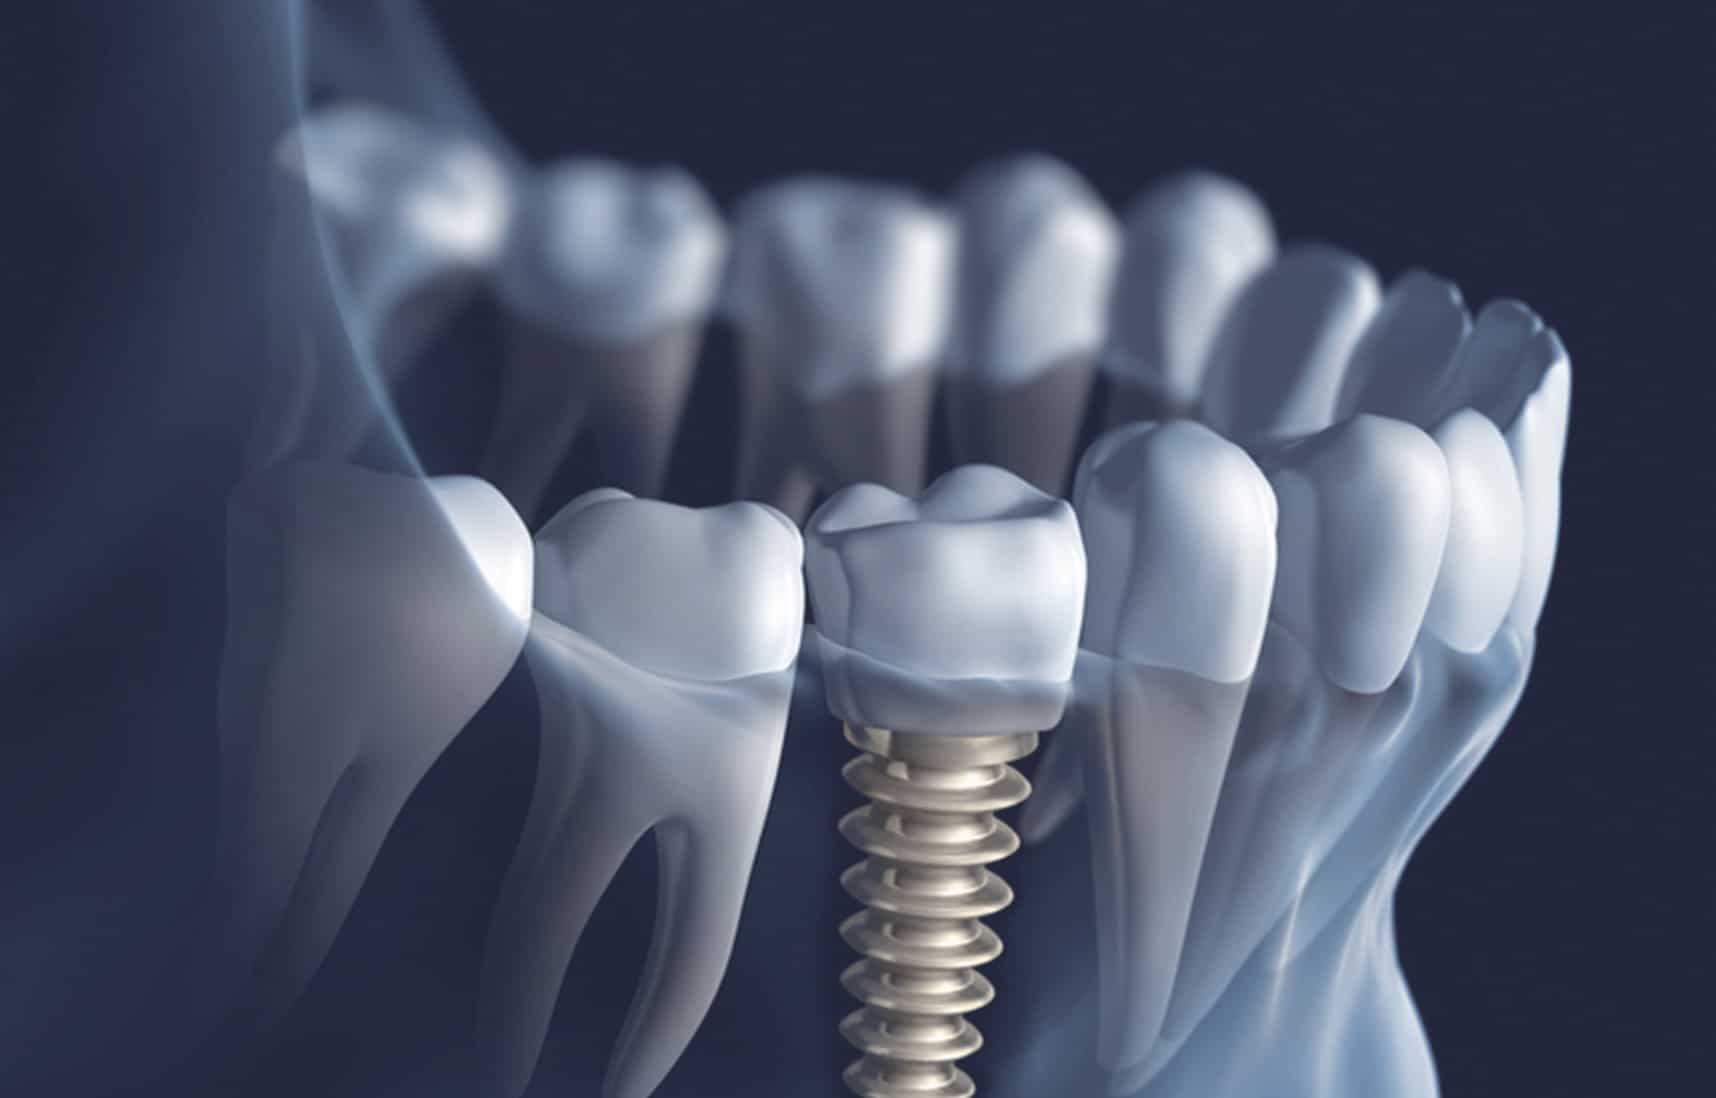 Dentus perfectus - implantology - what are dental implants?